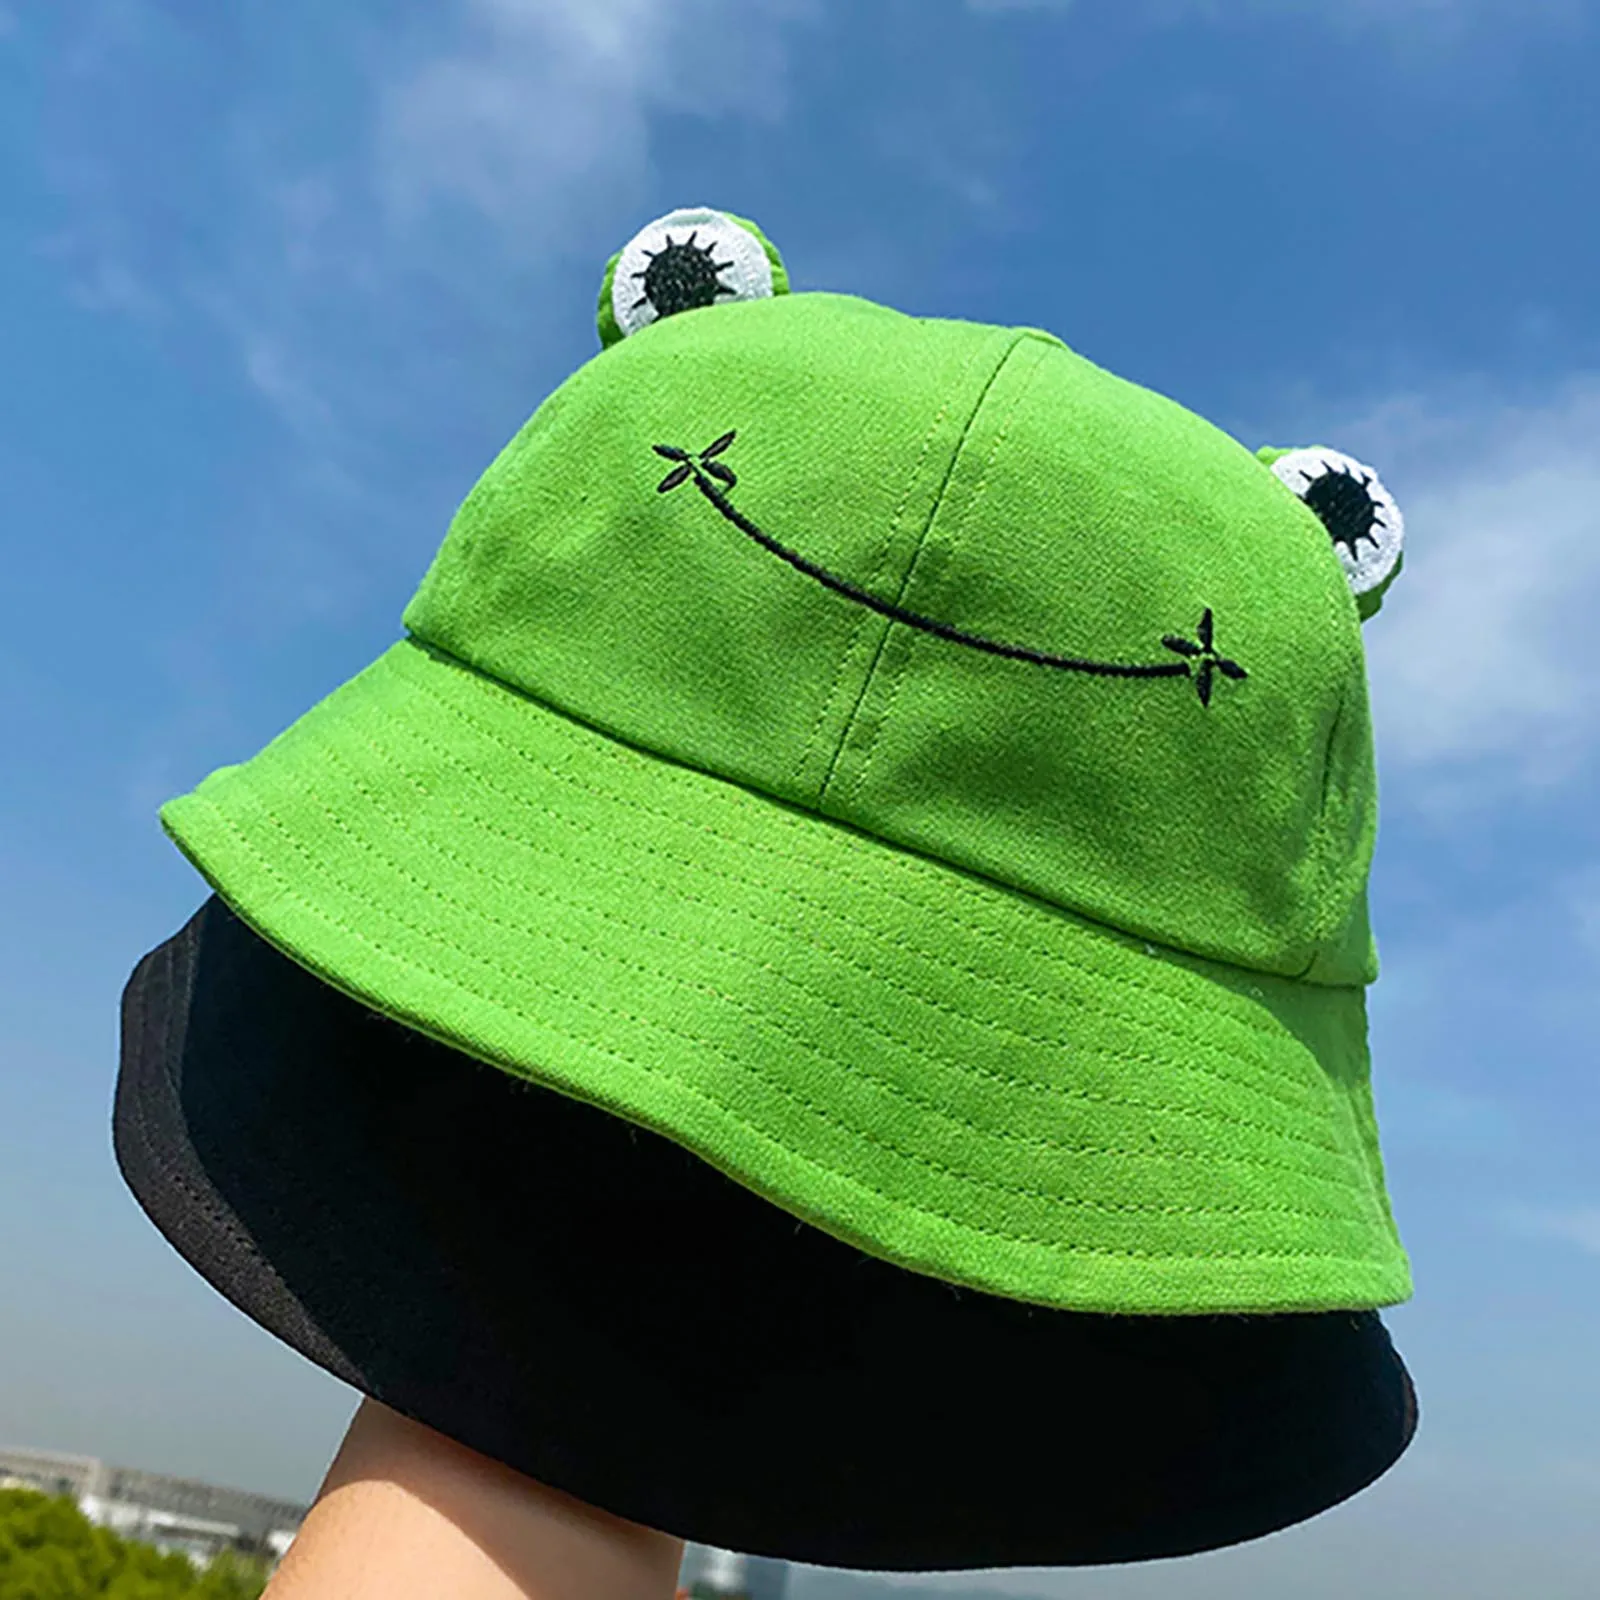 

2020 Frog Bucket Hat for Women Summer Autumn Plain Female Panama Outdoor Hiking Beach Fishing Cap Sunscreen Woman Sunhat Bob